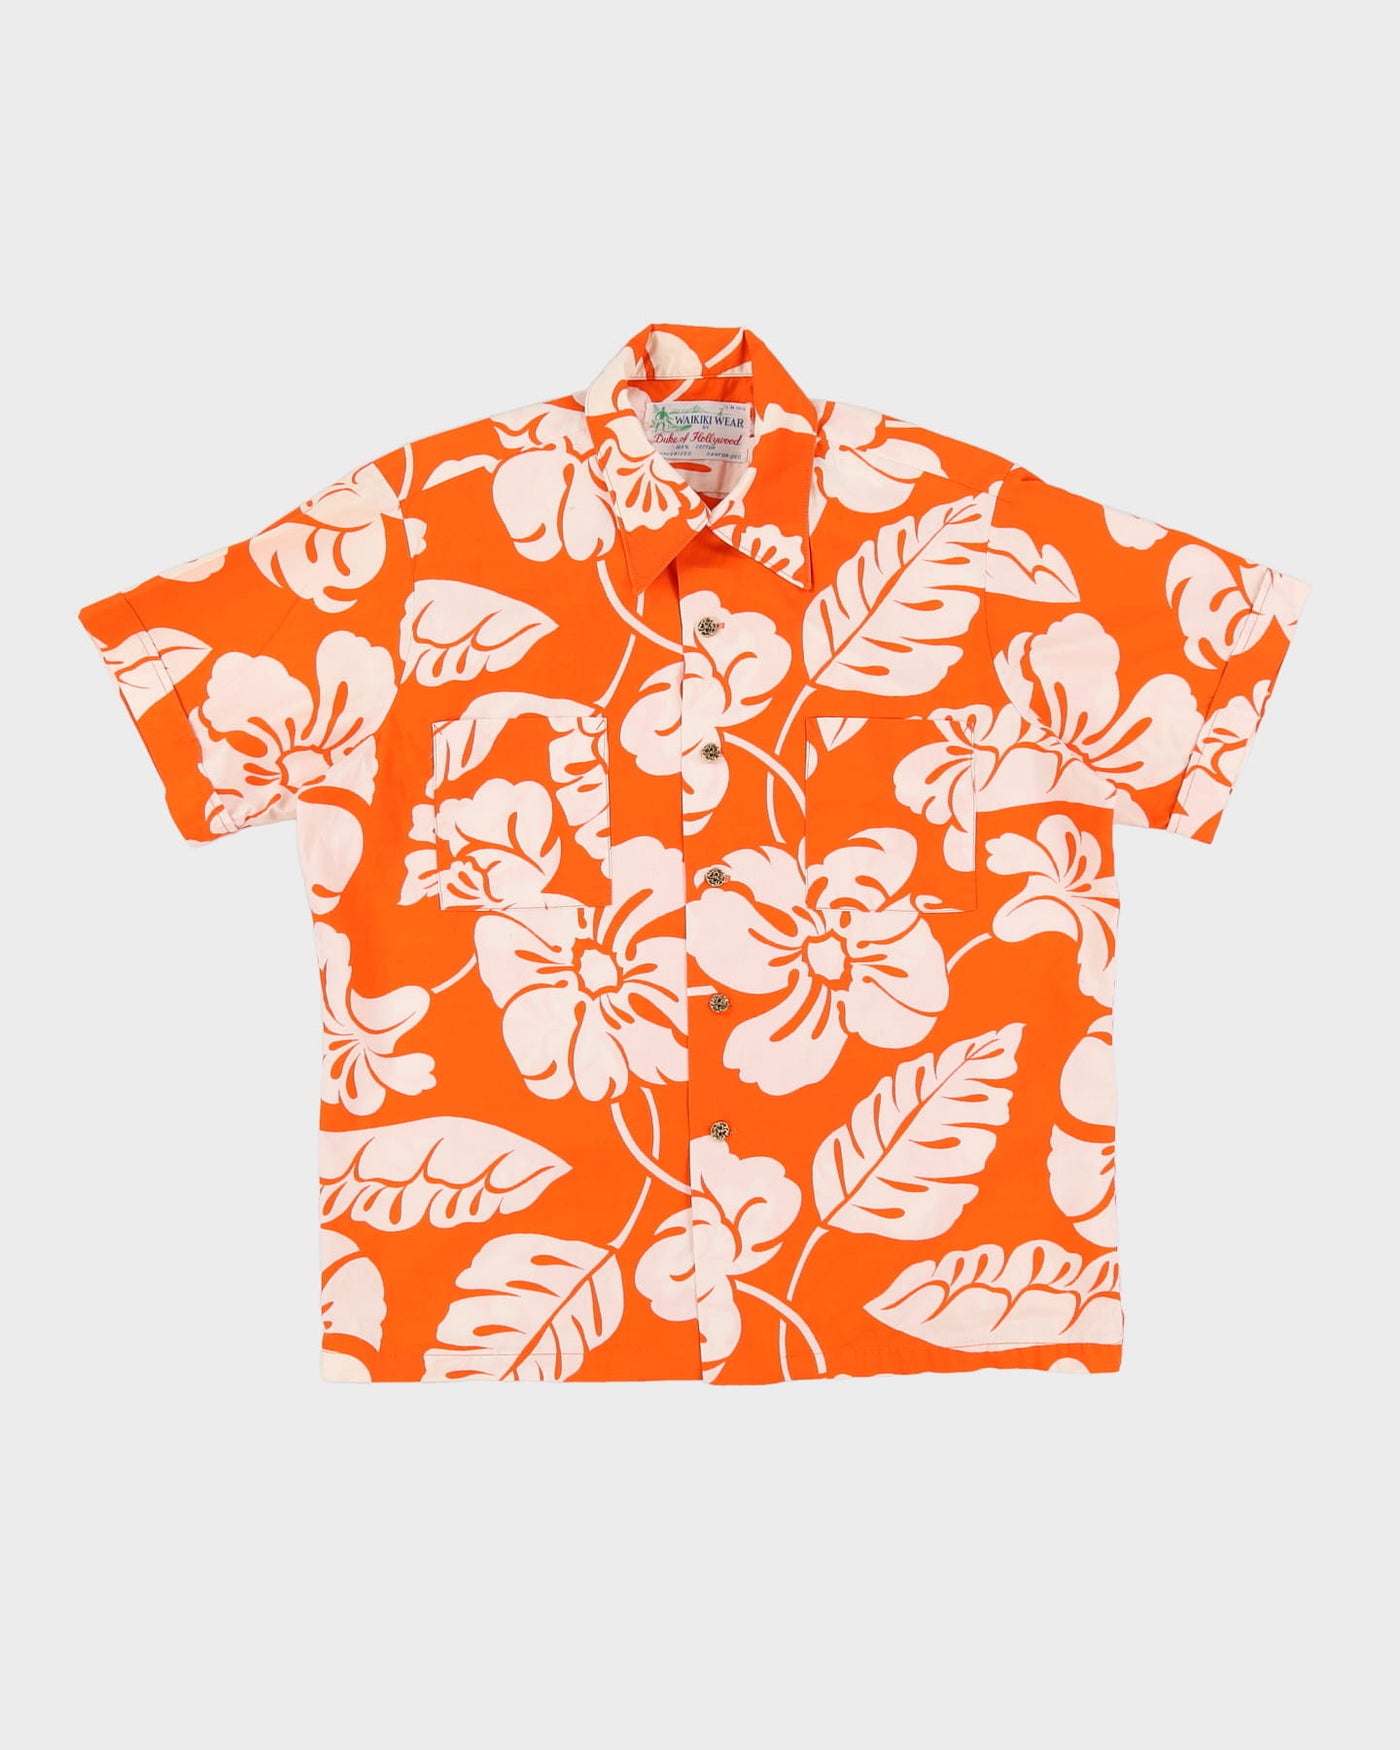 Vintage 70s Orange / Floral Patterned Hawaiian Shirt - M